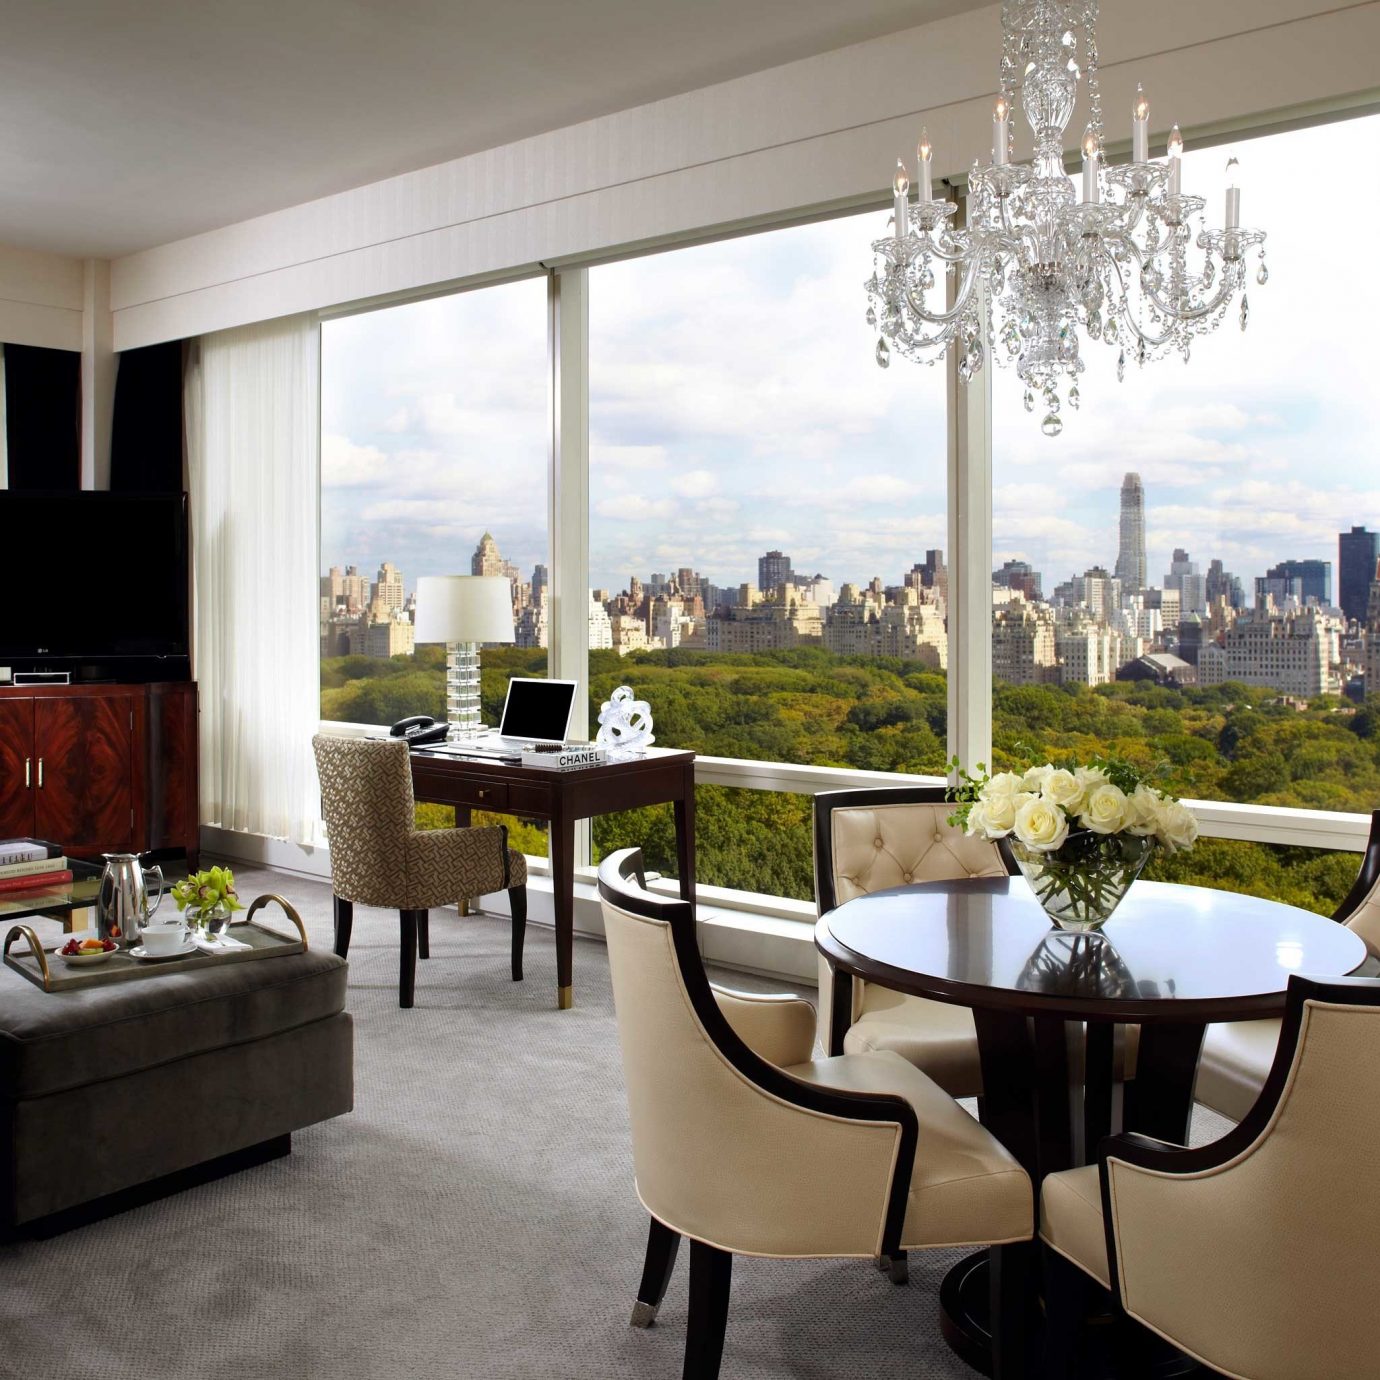 City Elegant Luxury Suite property living room home condominium house Villa overlooking nice Bedroom dining table